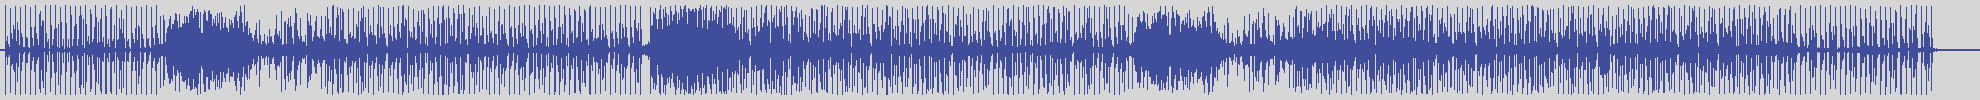 nf_boyz_records [NFY059] Garcia Grande - Tarde Clara [Original Mix] audio wave form